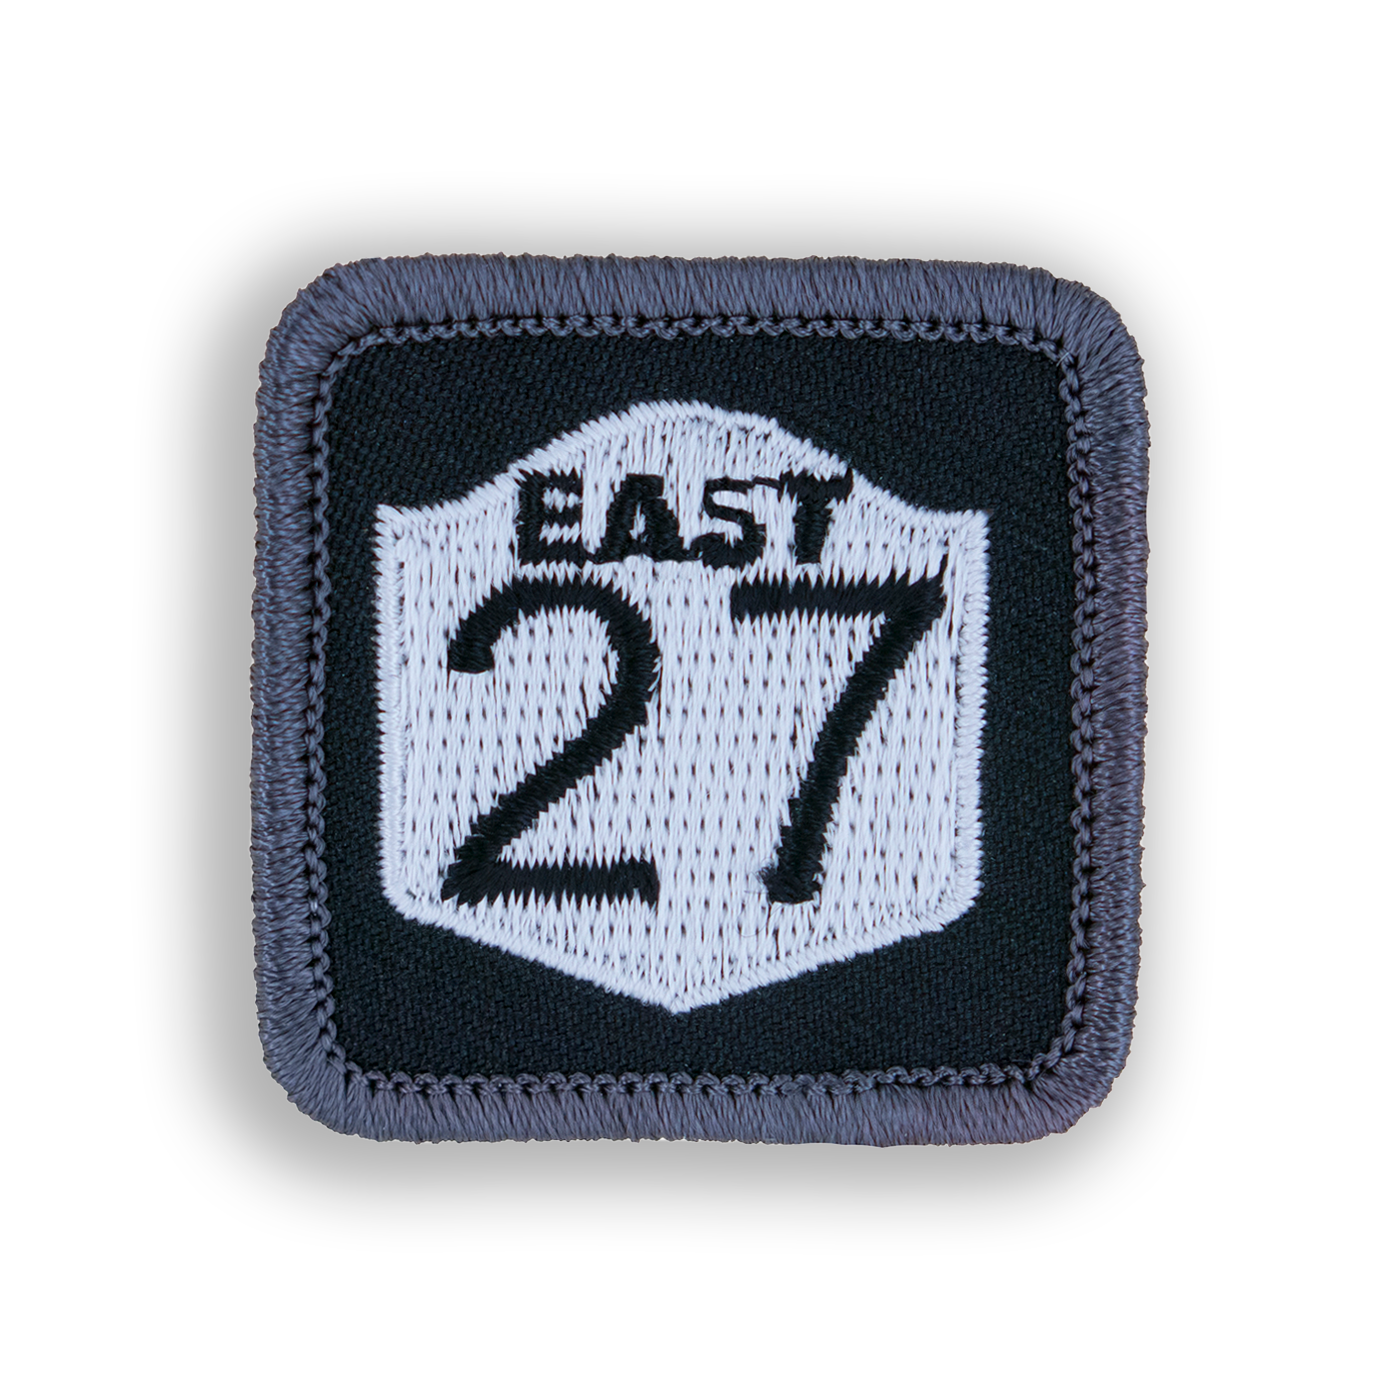 East 27 Patch | Demerit Wear - Fake Merit Badges